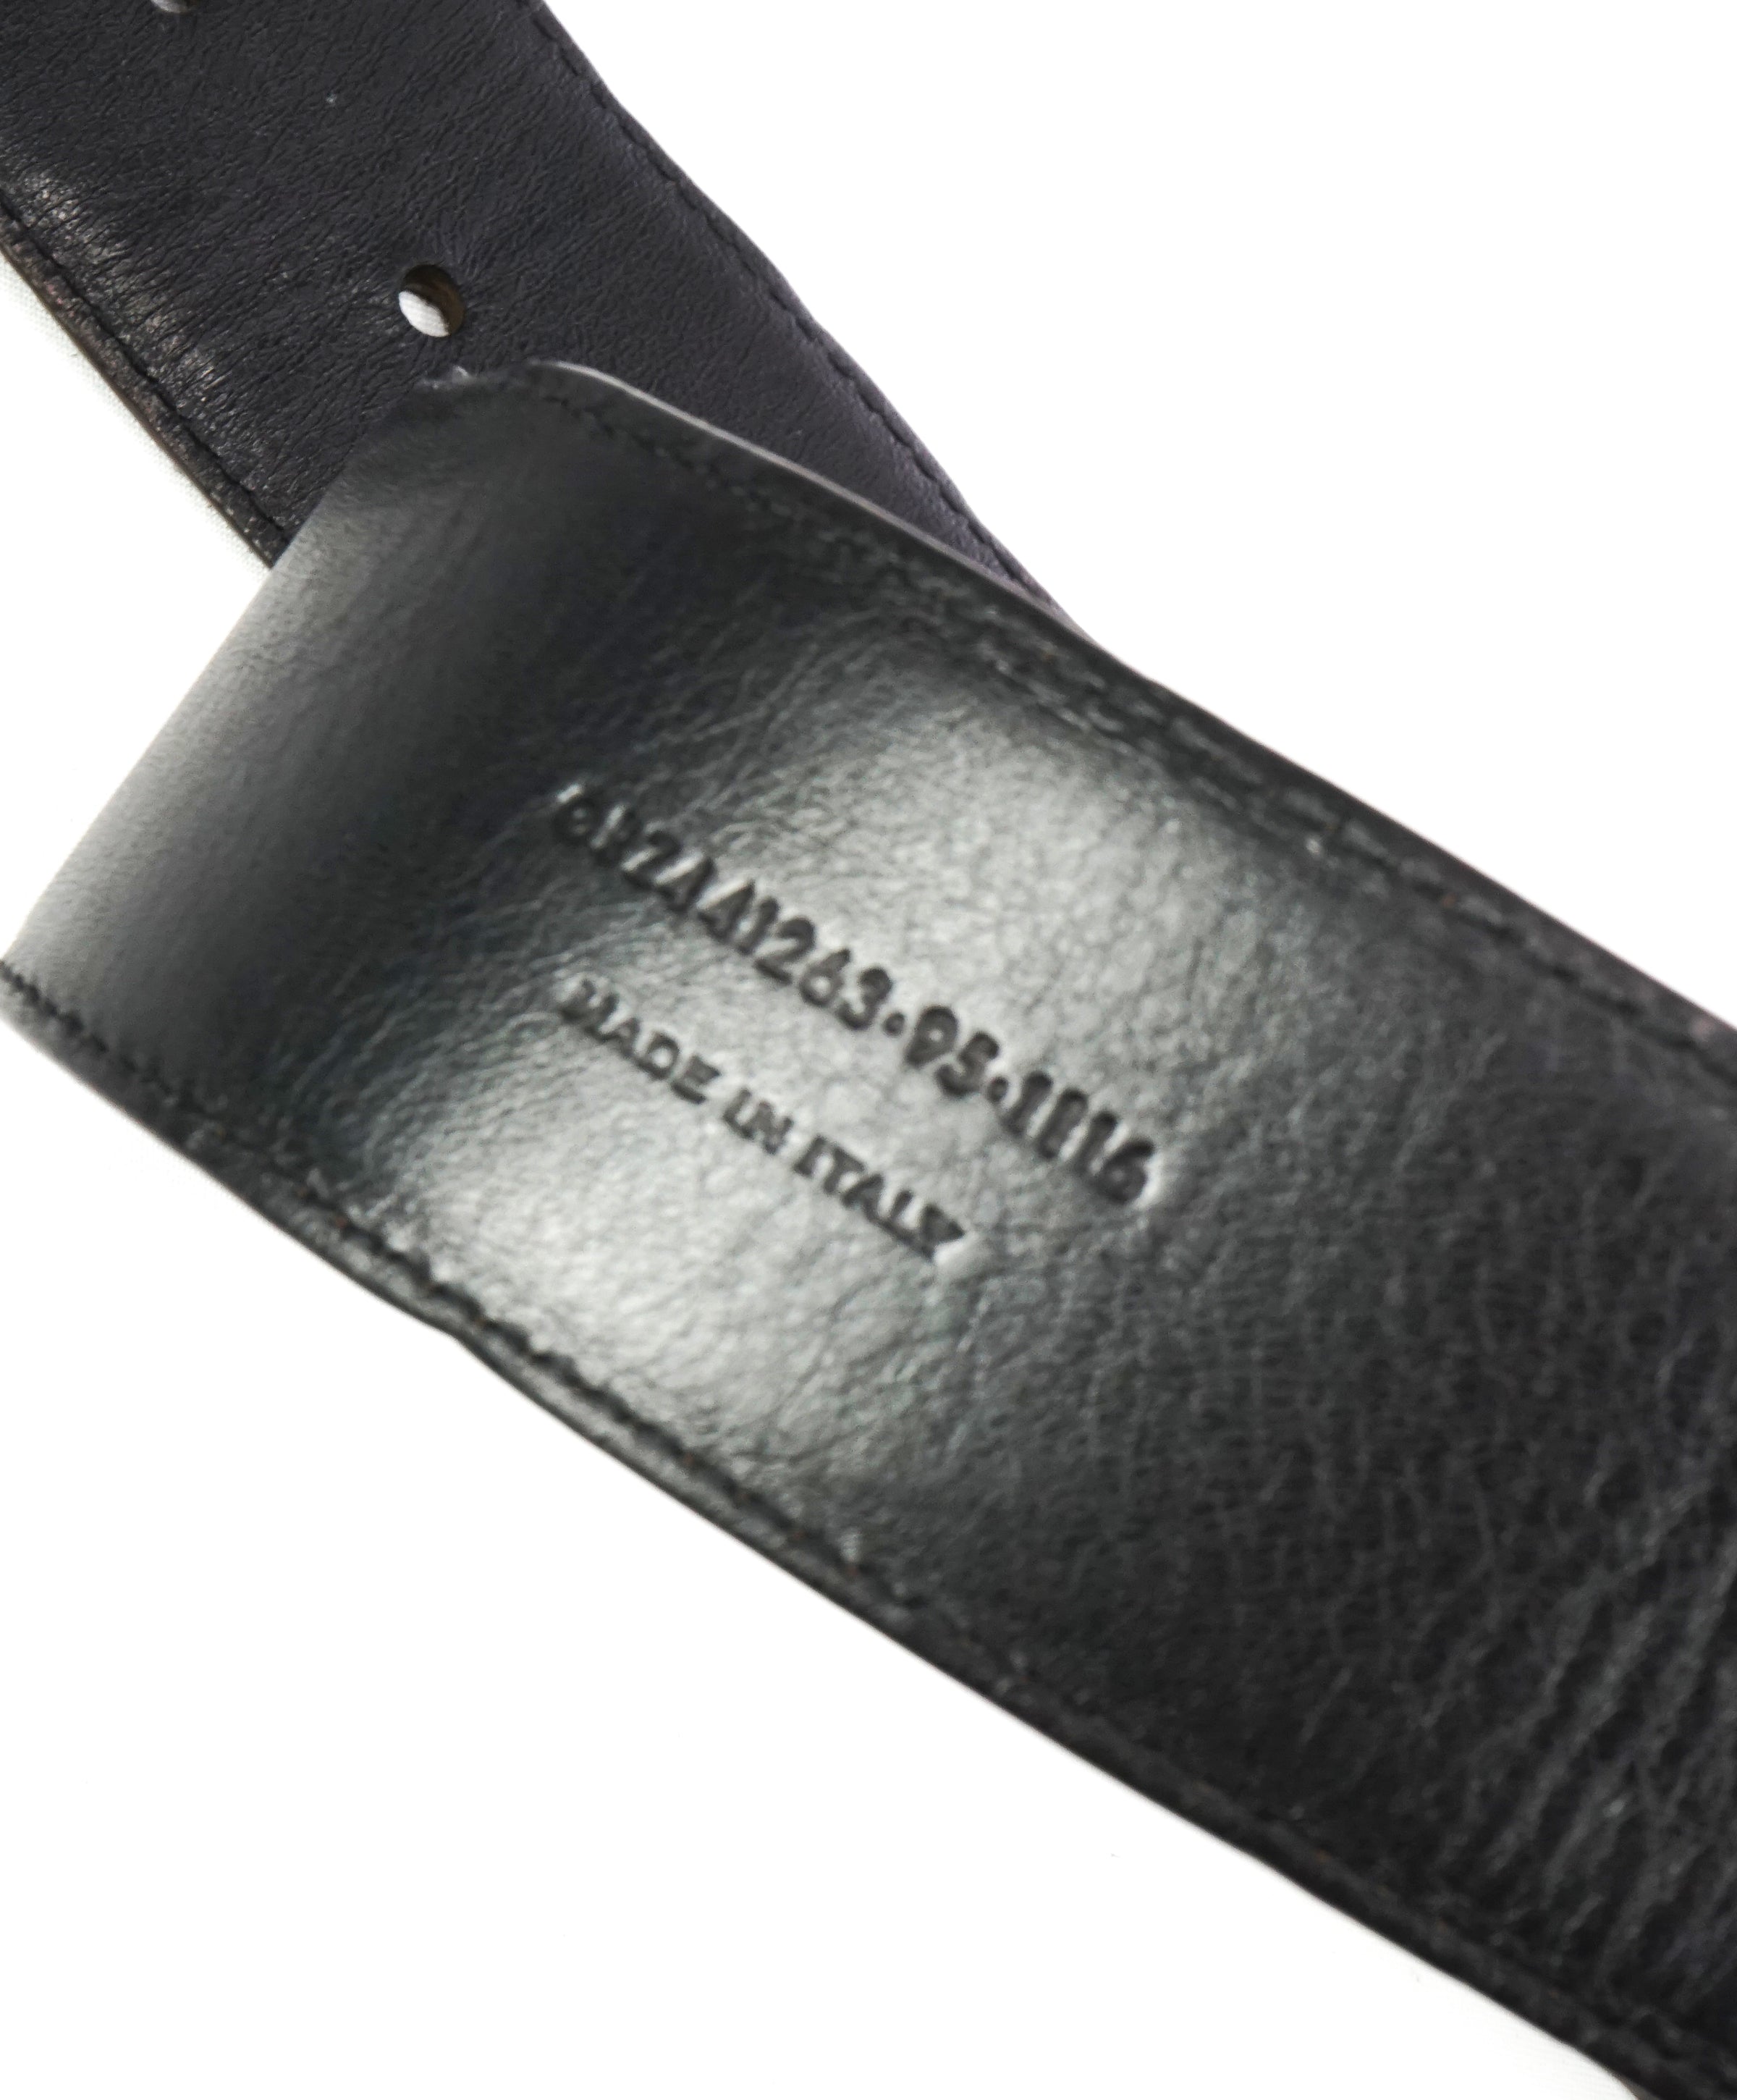 High quality solid brass Yves Saint Laurent Y waist belt buckle